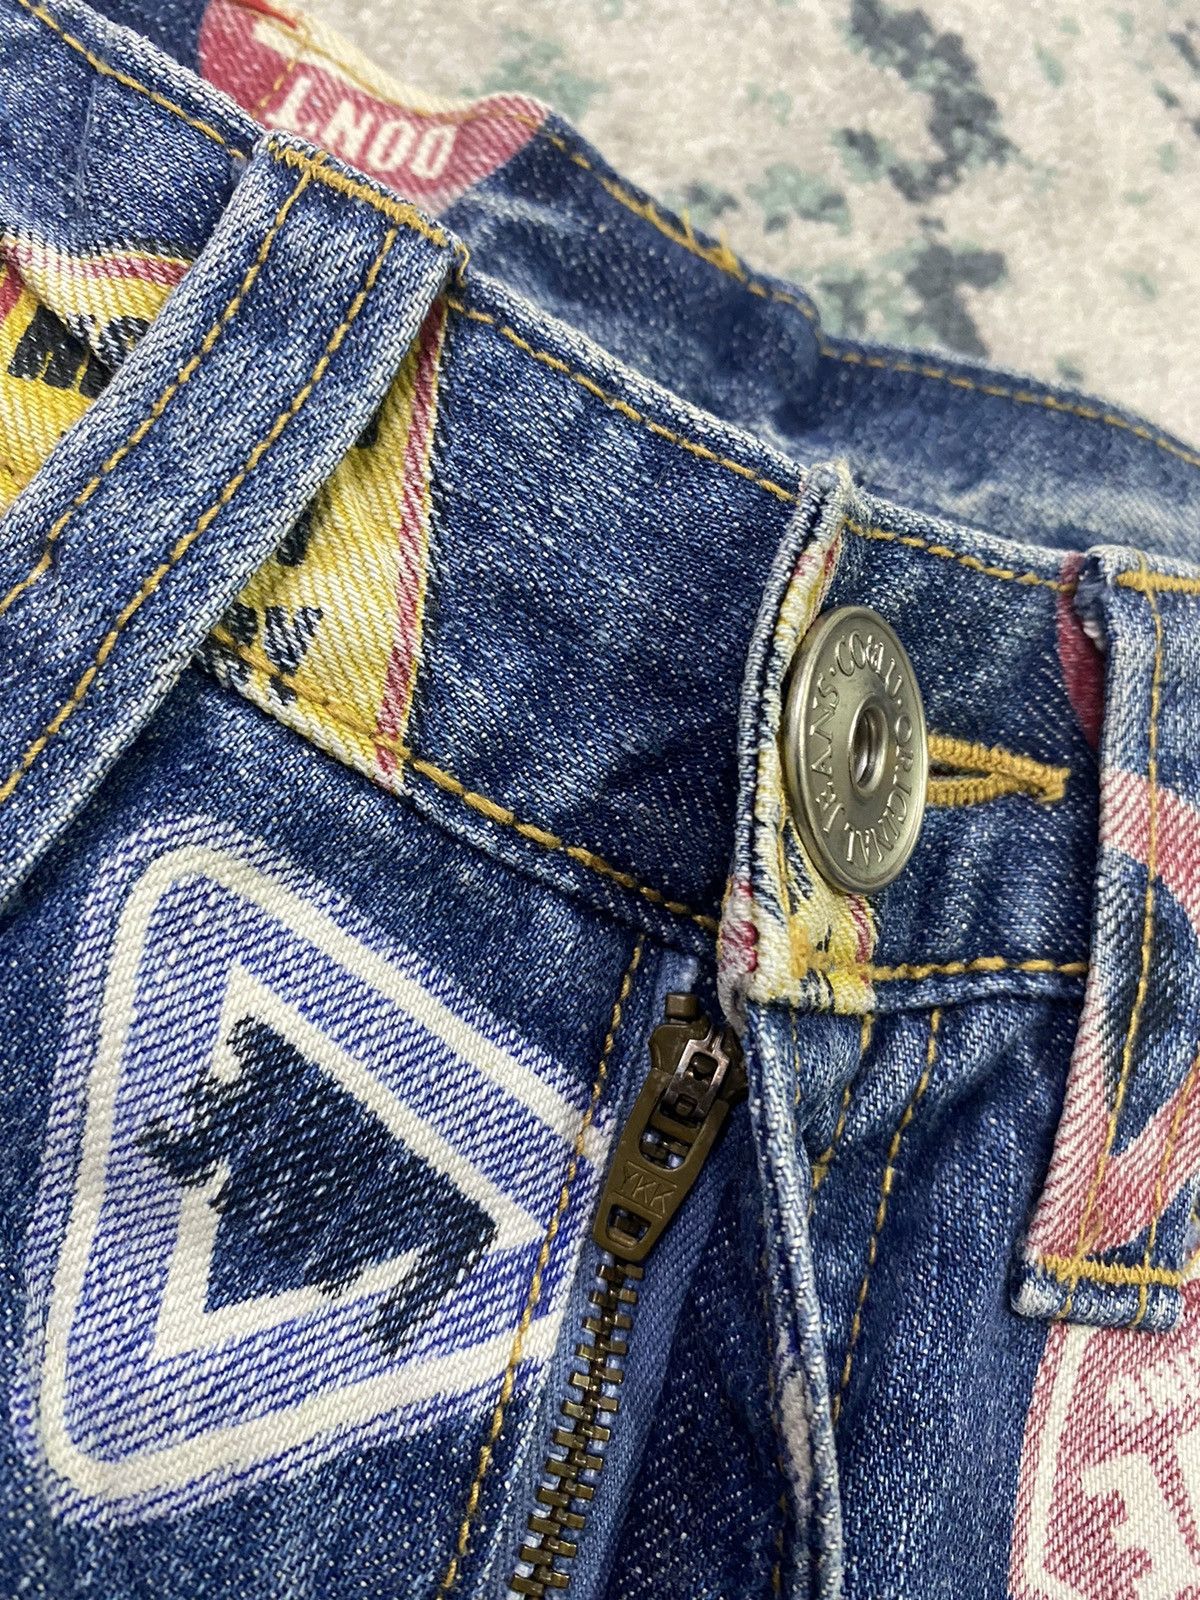 Vintage Co&Lu Full Print Jeans Denim Pant - 6